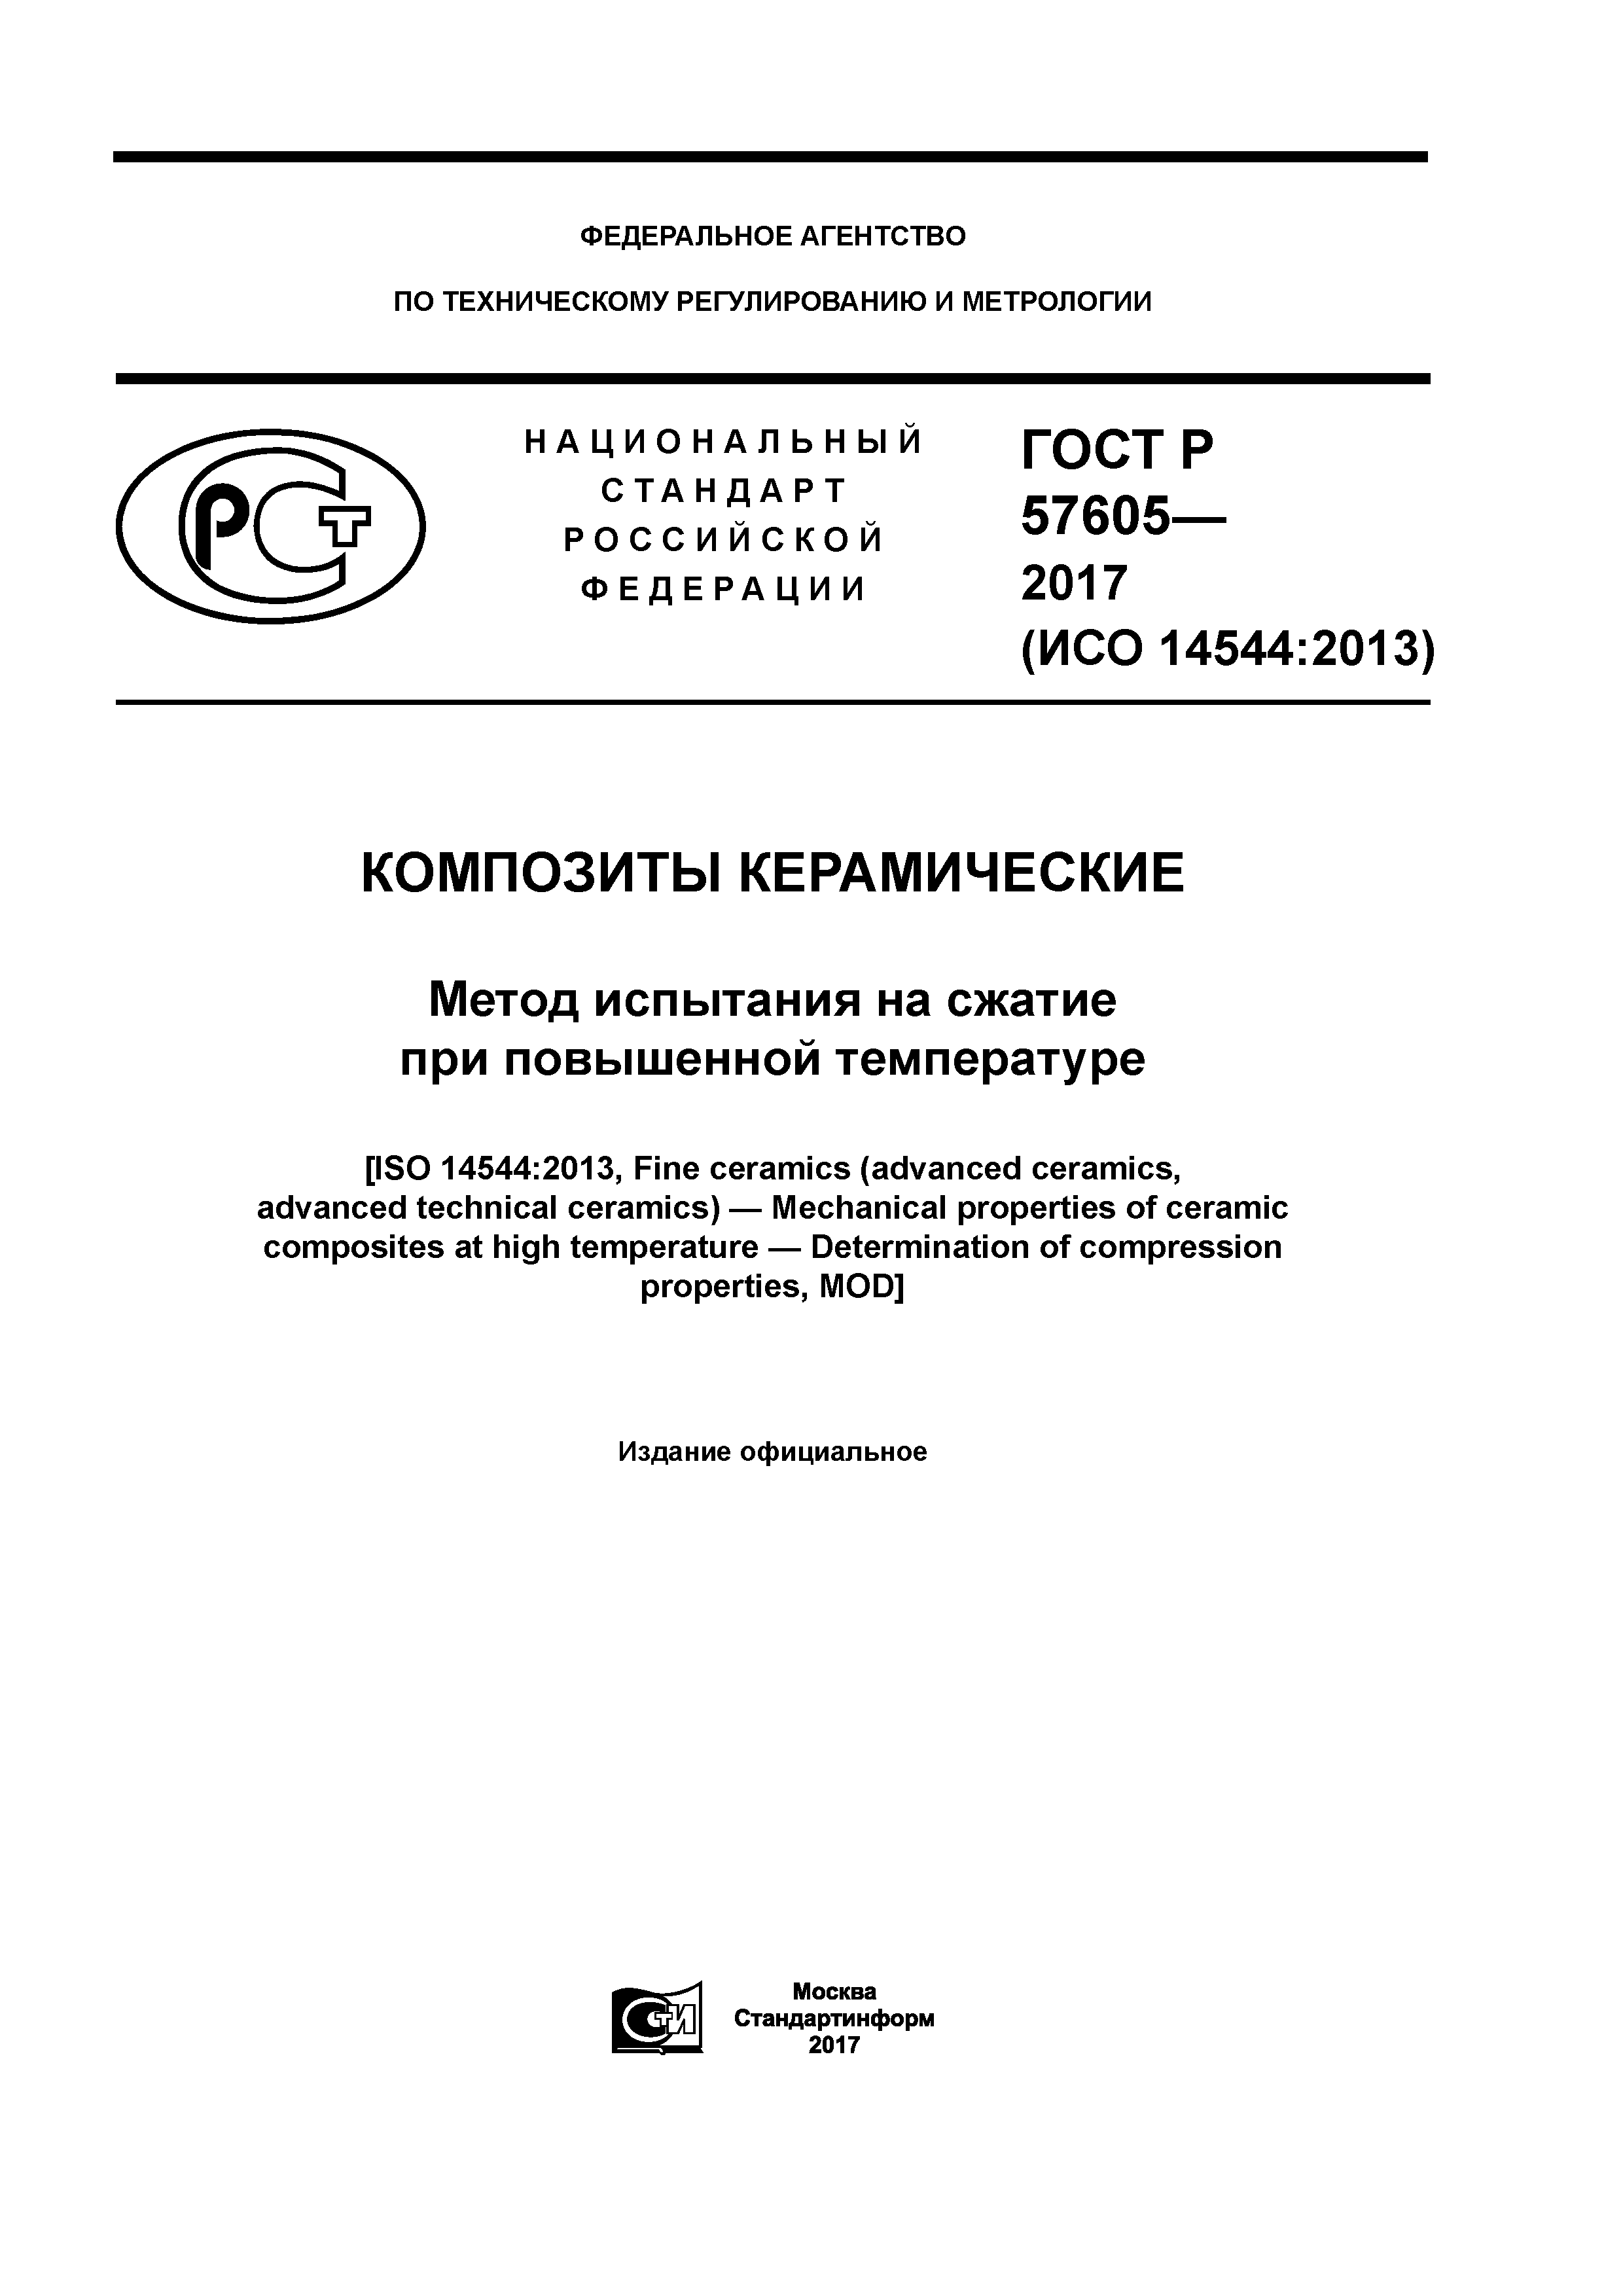 ГОСТ Р 57605-2017